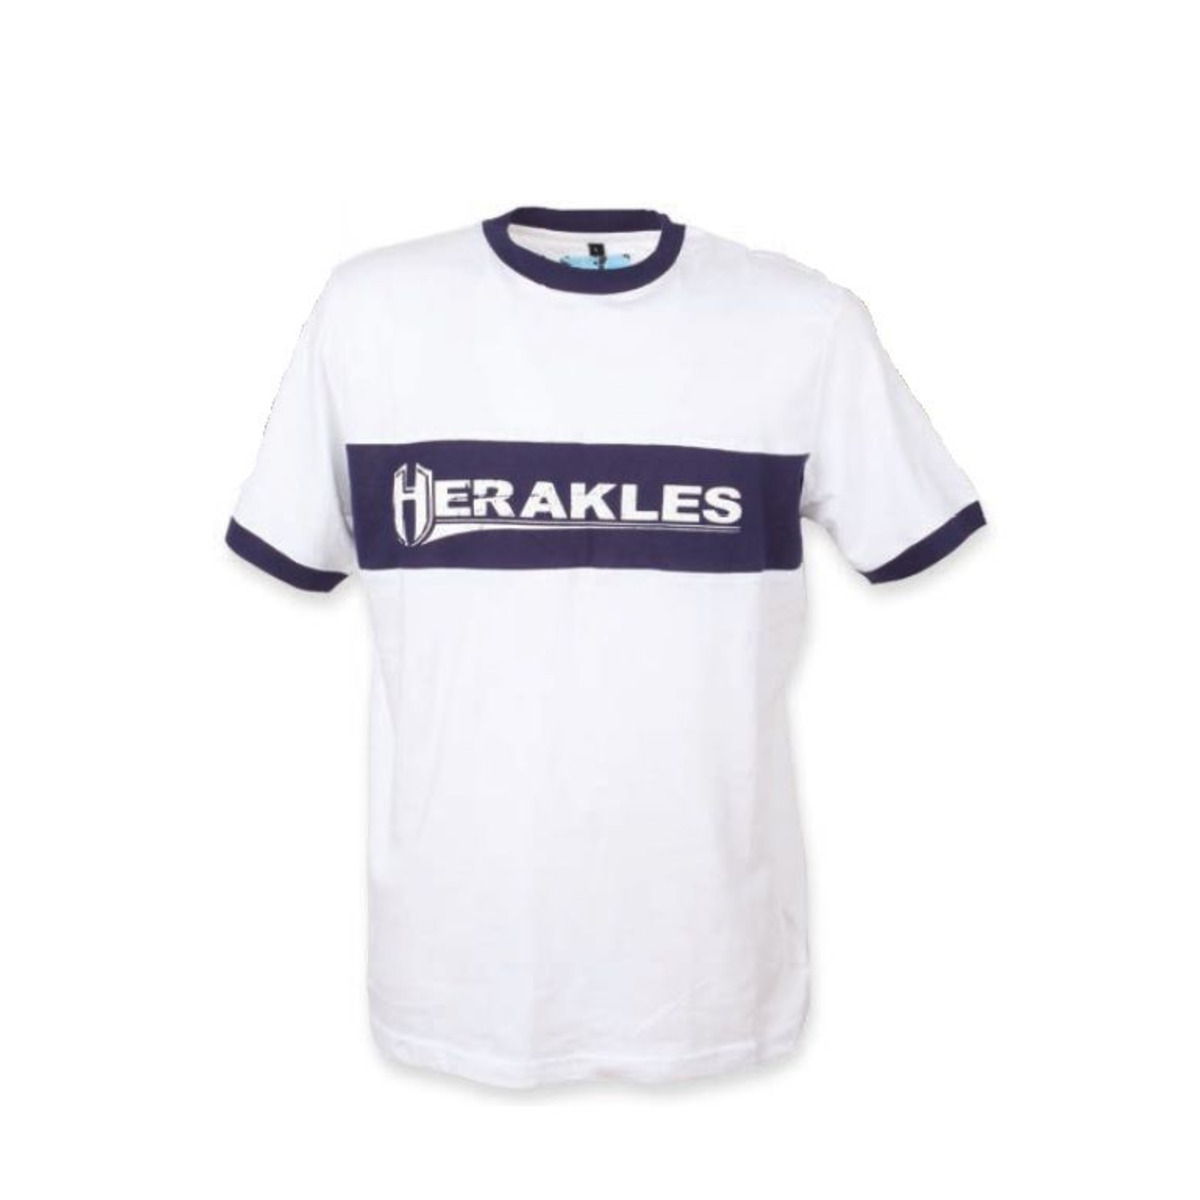 Herakles T-Shirt Bianca-Blu - 2XL